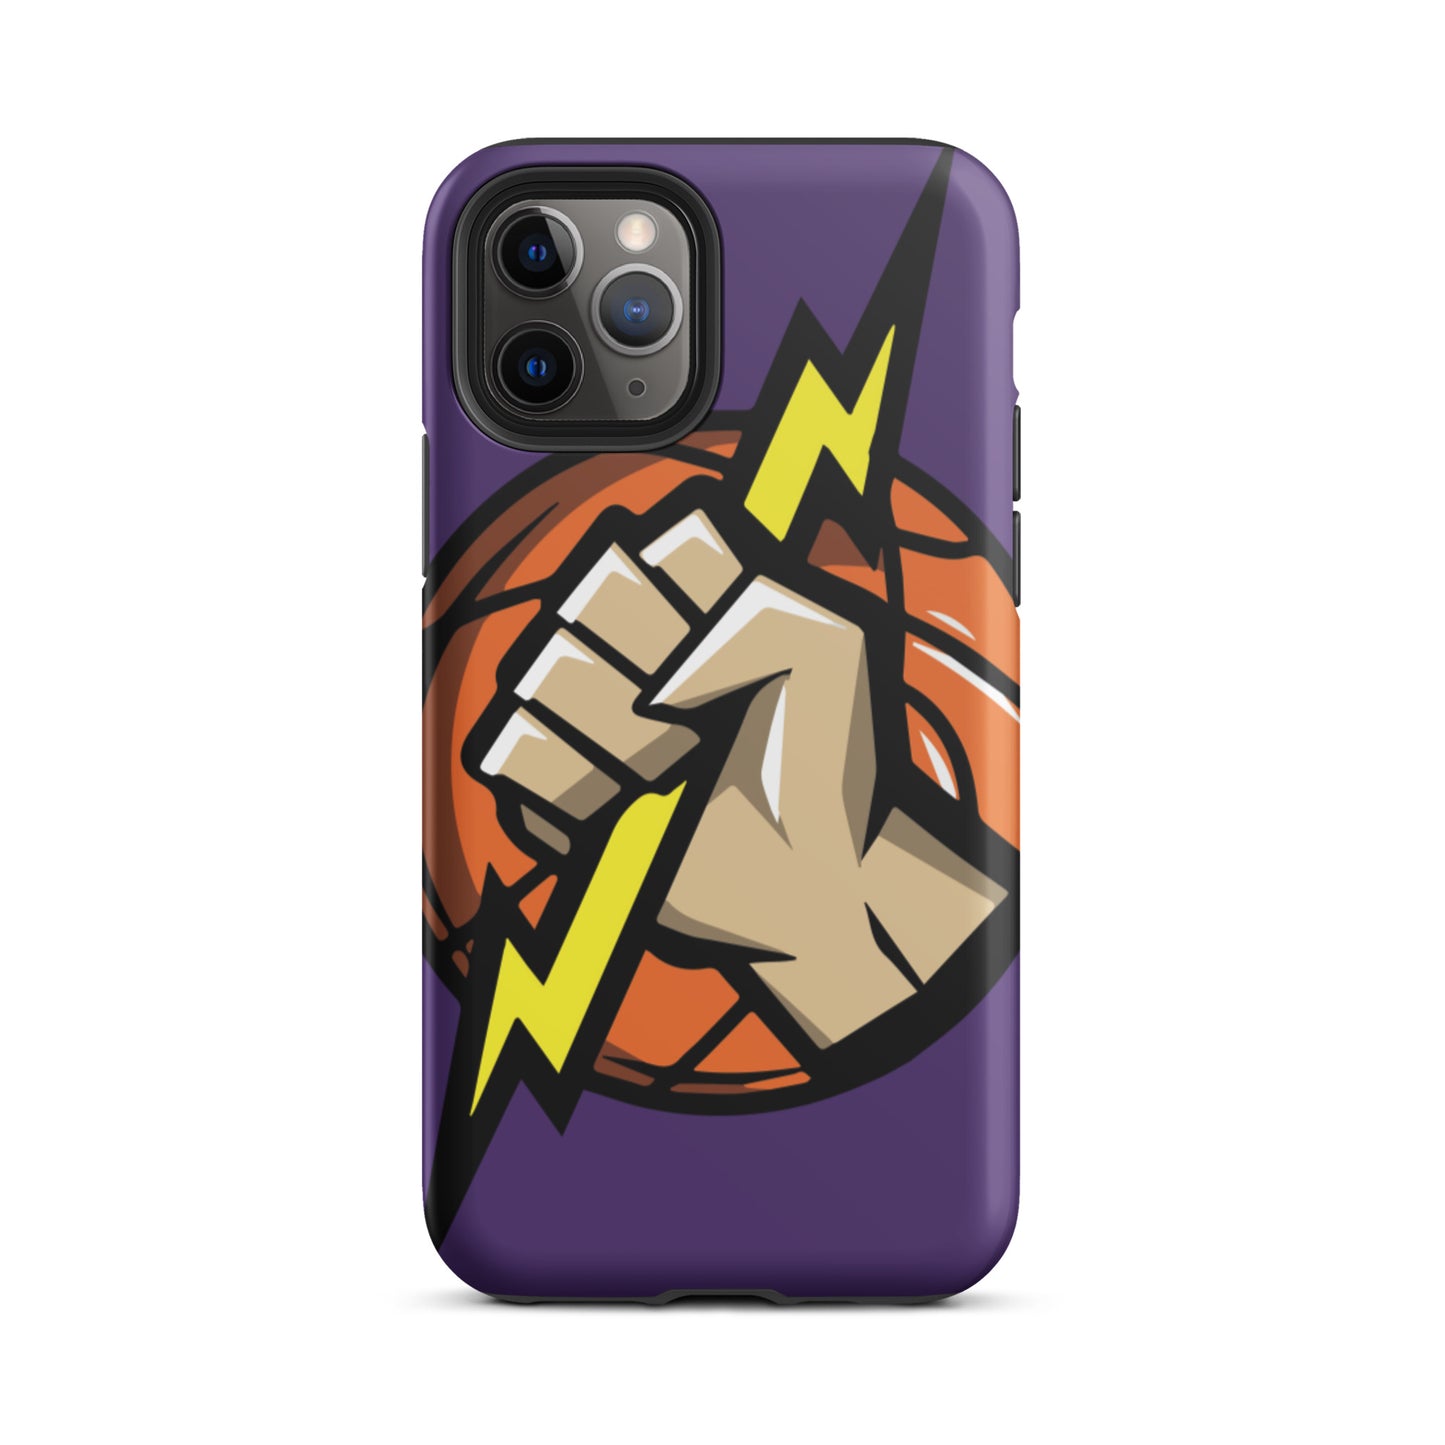 Thunder & Lightning iPhone case (Purple)